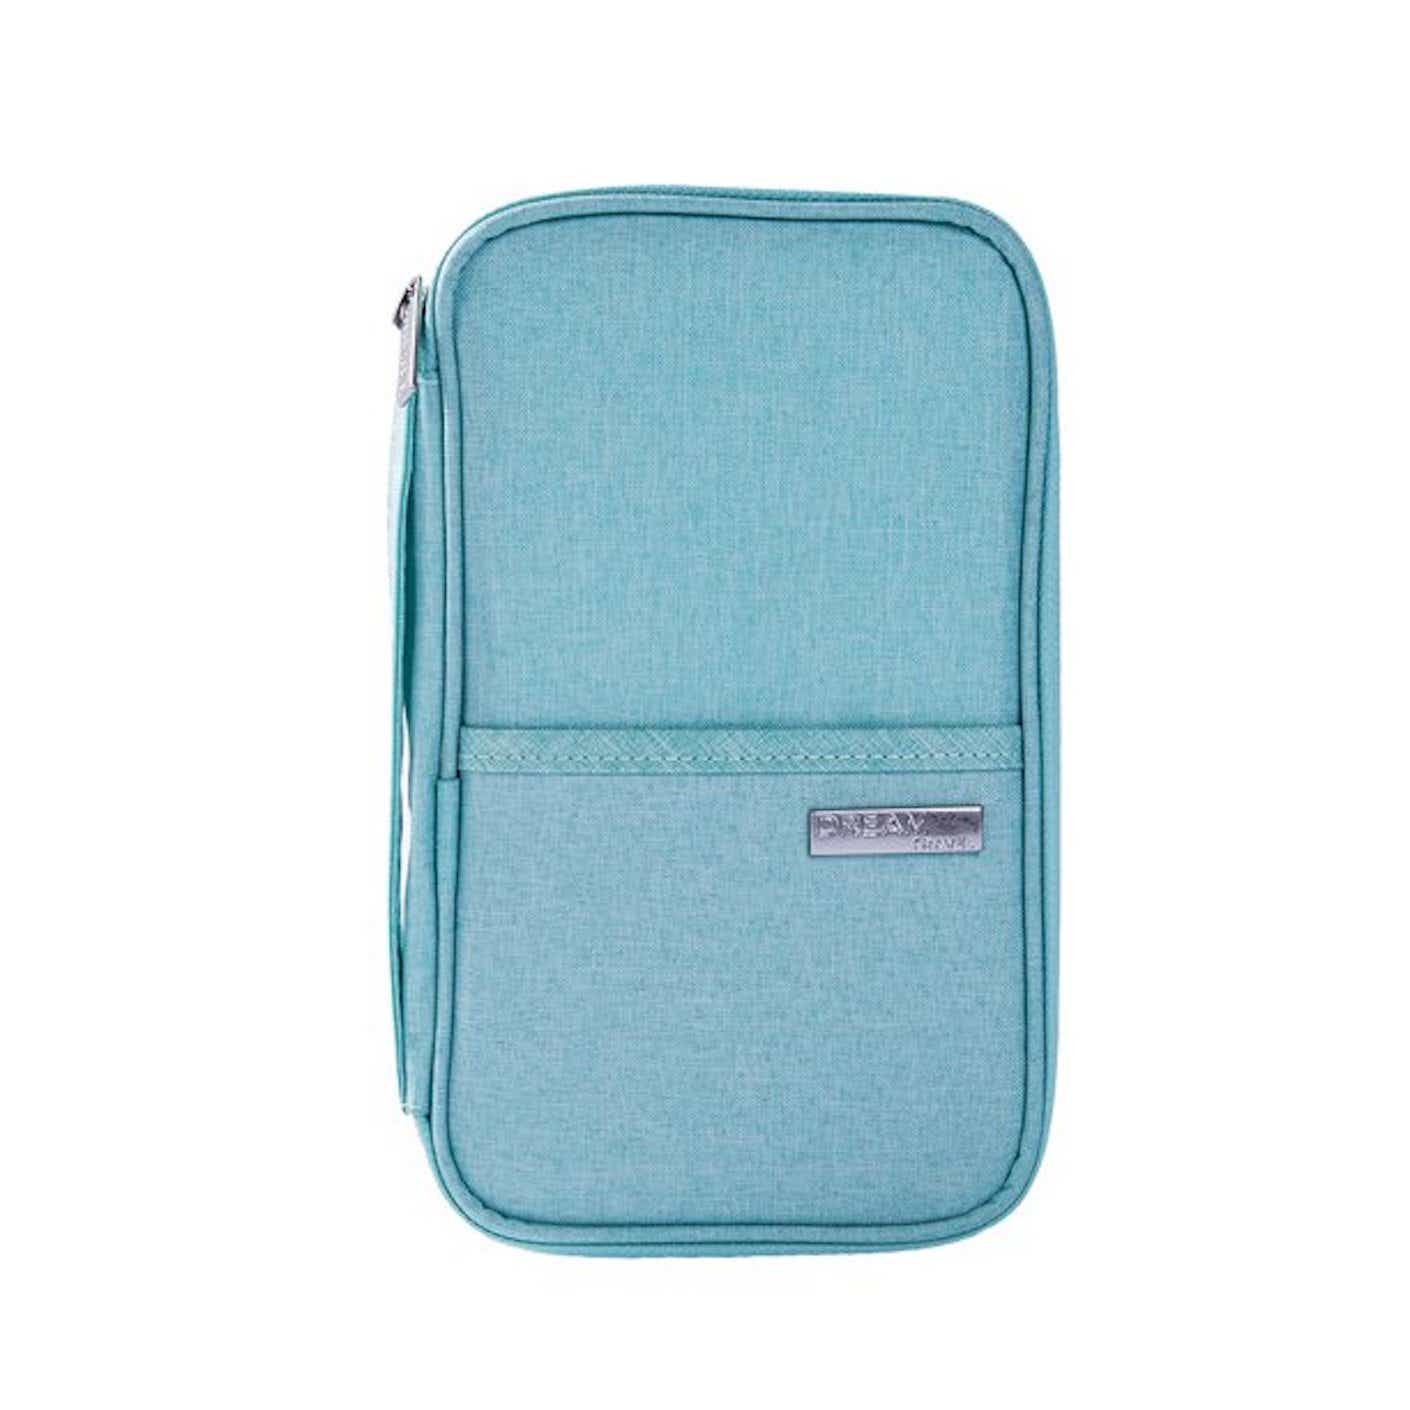 A soft, zippered, teal travel wallet lies flat on a white surface.